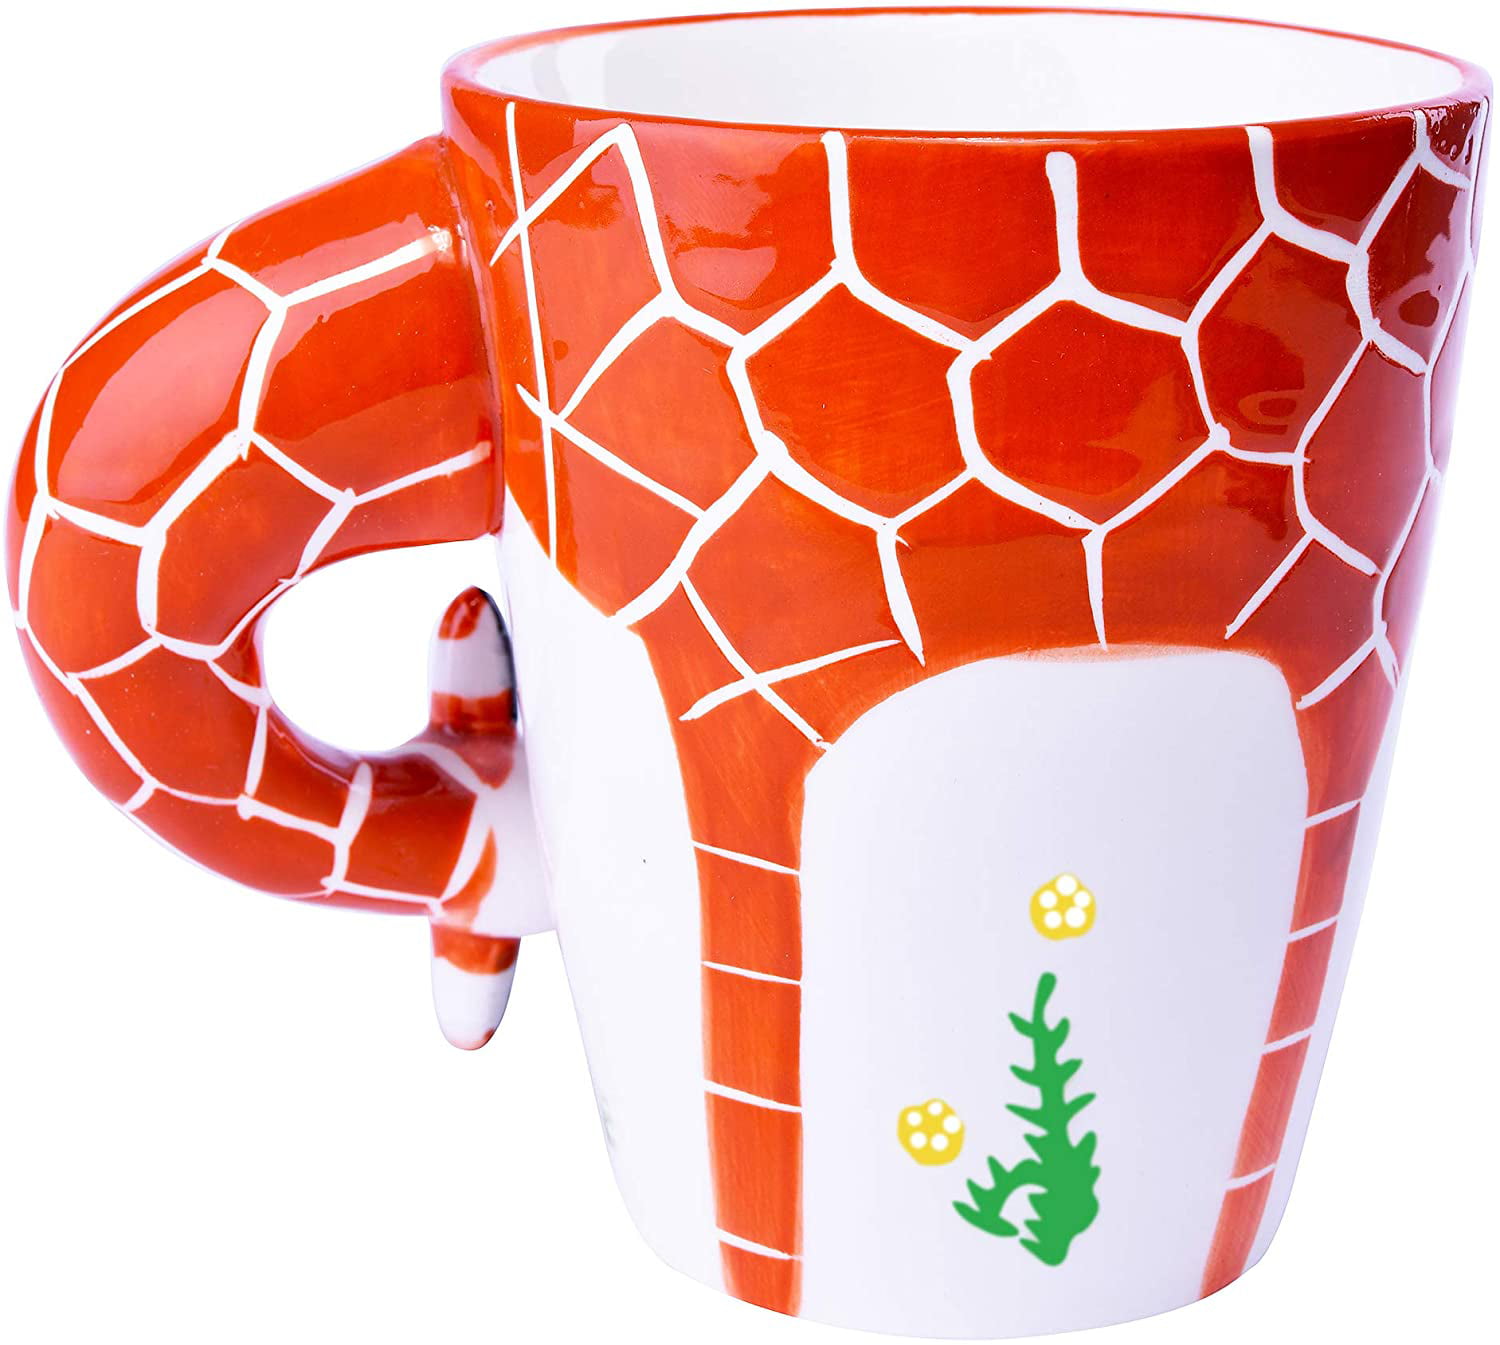 Coffee mug pottery Handmade coffee mug Pottery mug Cat mug Espresso cup Ceramic cup Animal mug Handmade mugs Pottery mugs